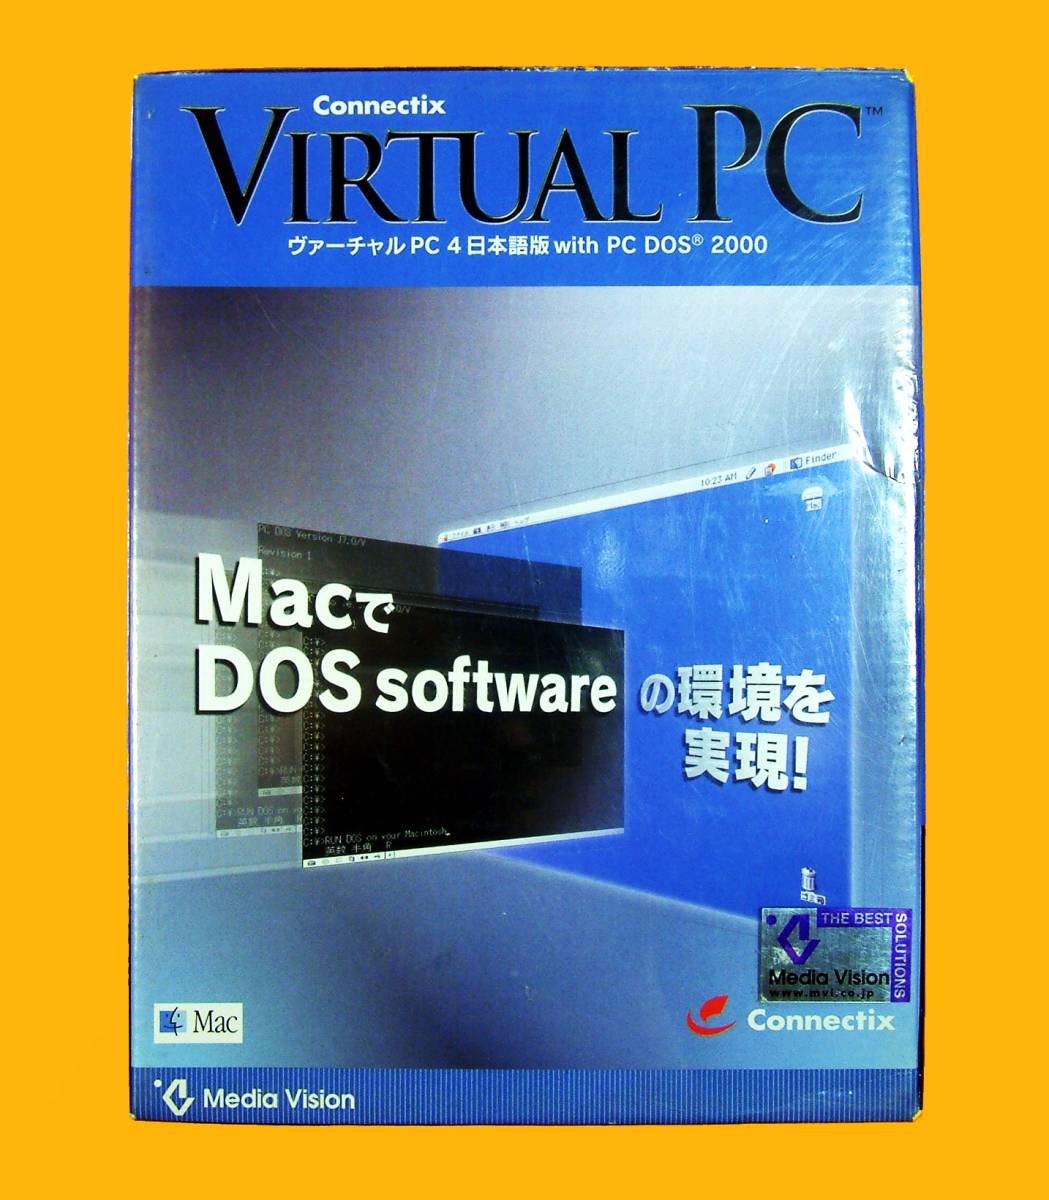 【5068】Connectix Virtual PC 4 with PC DOS 2000 未開封品 Macintosh(マッキントッシュ)でヴァーチャル環境 仮想化 仮想マシン(マシーン)